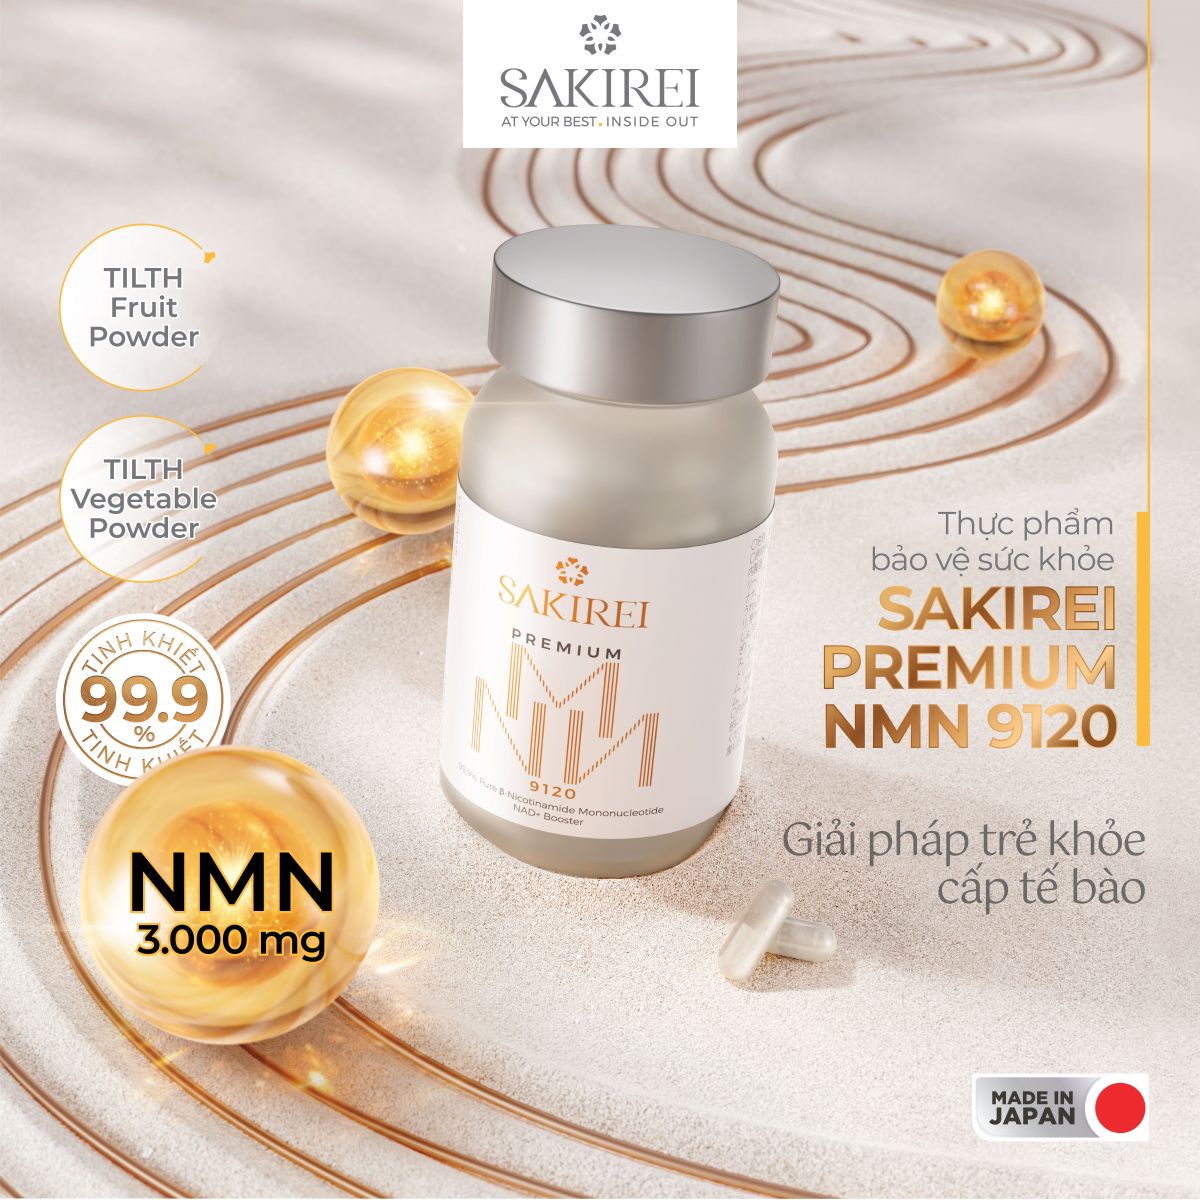 Thực phẩm bảo vệ sức khỏe Sakirei Premium NMN 9120